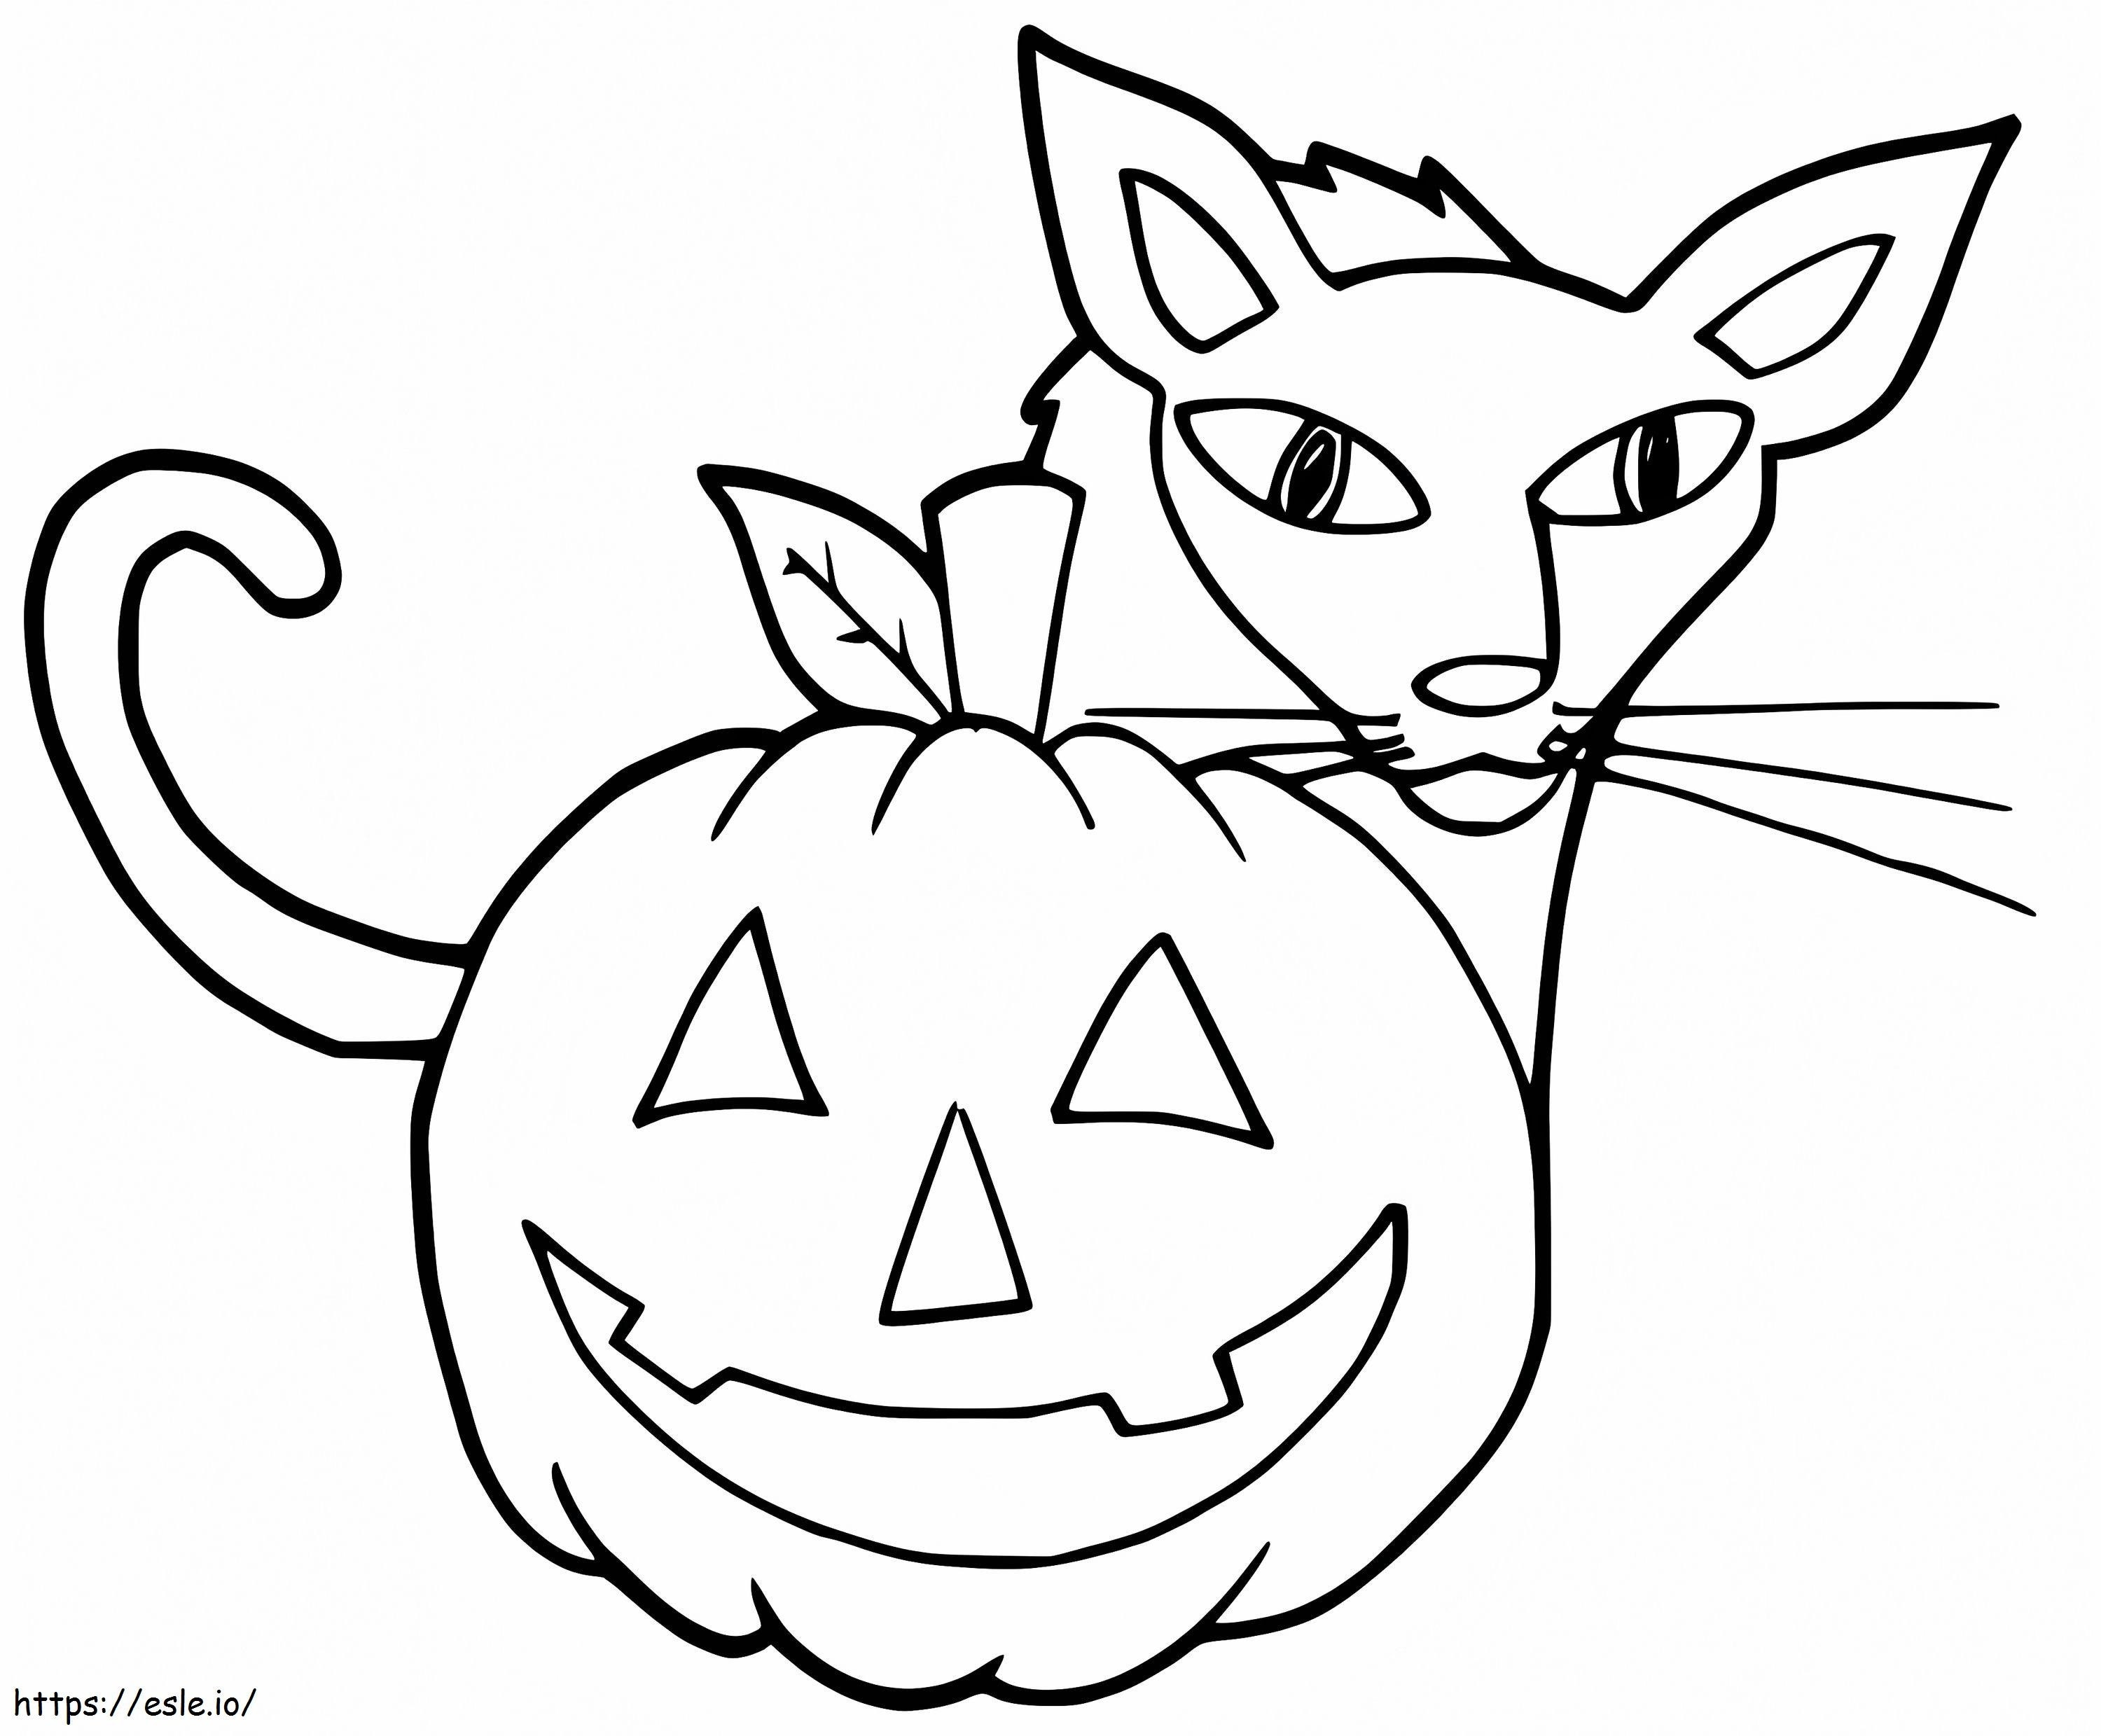 Cat Behind Pumpkin coloring page